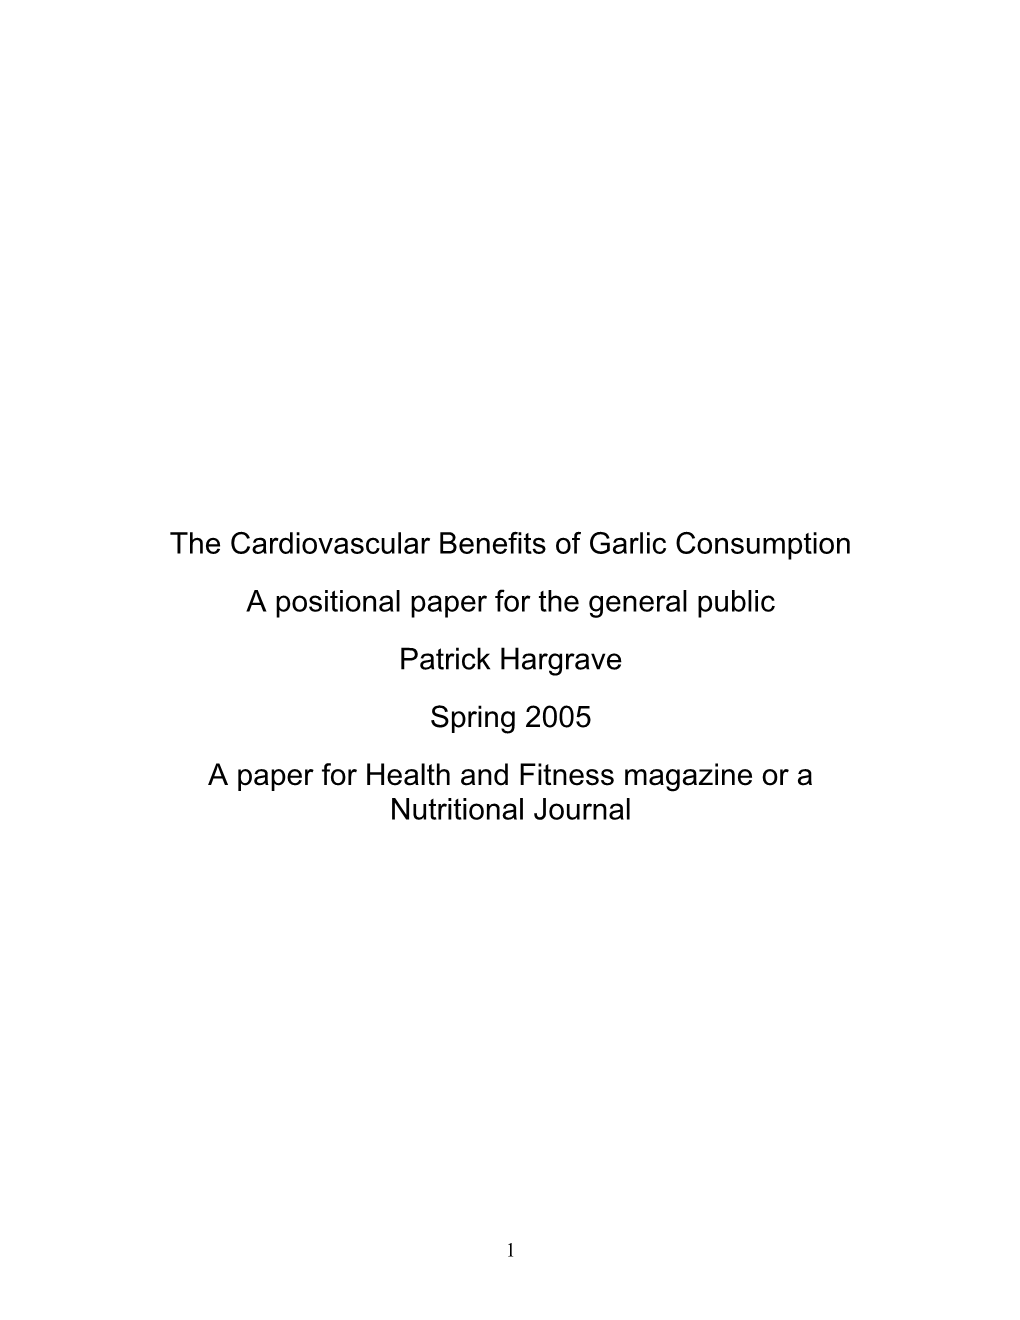 The Cardiovascular Benefits of Garlic Consumption